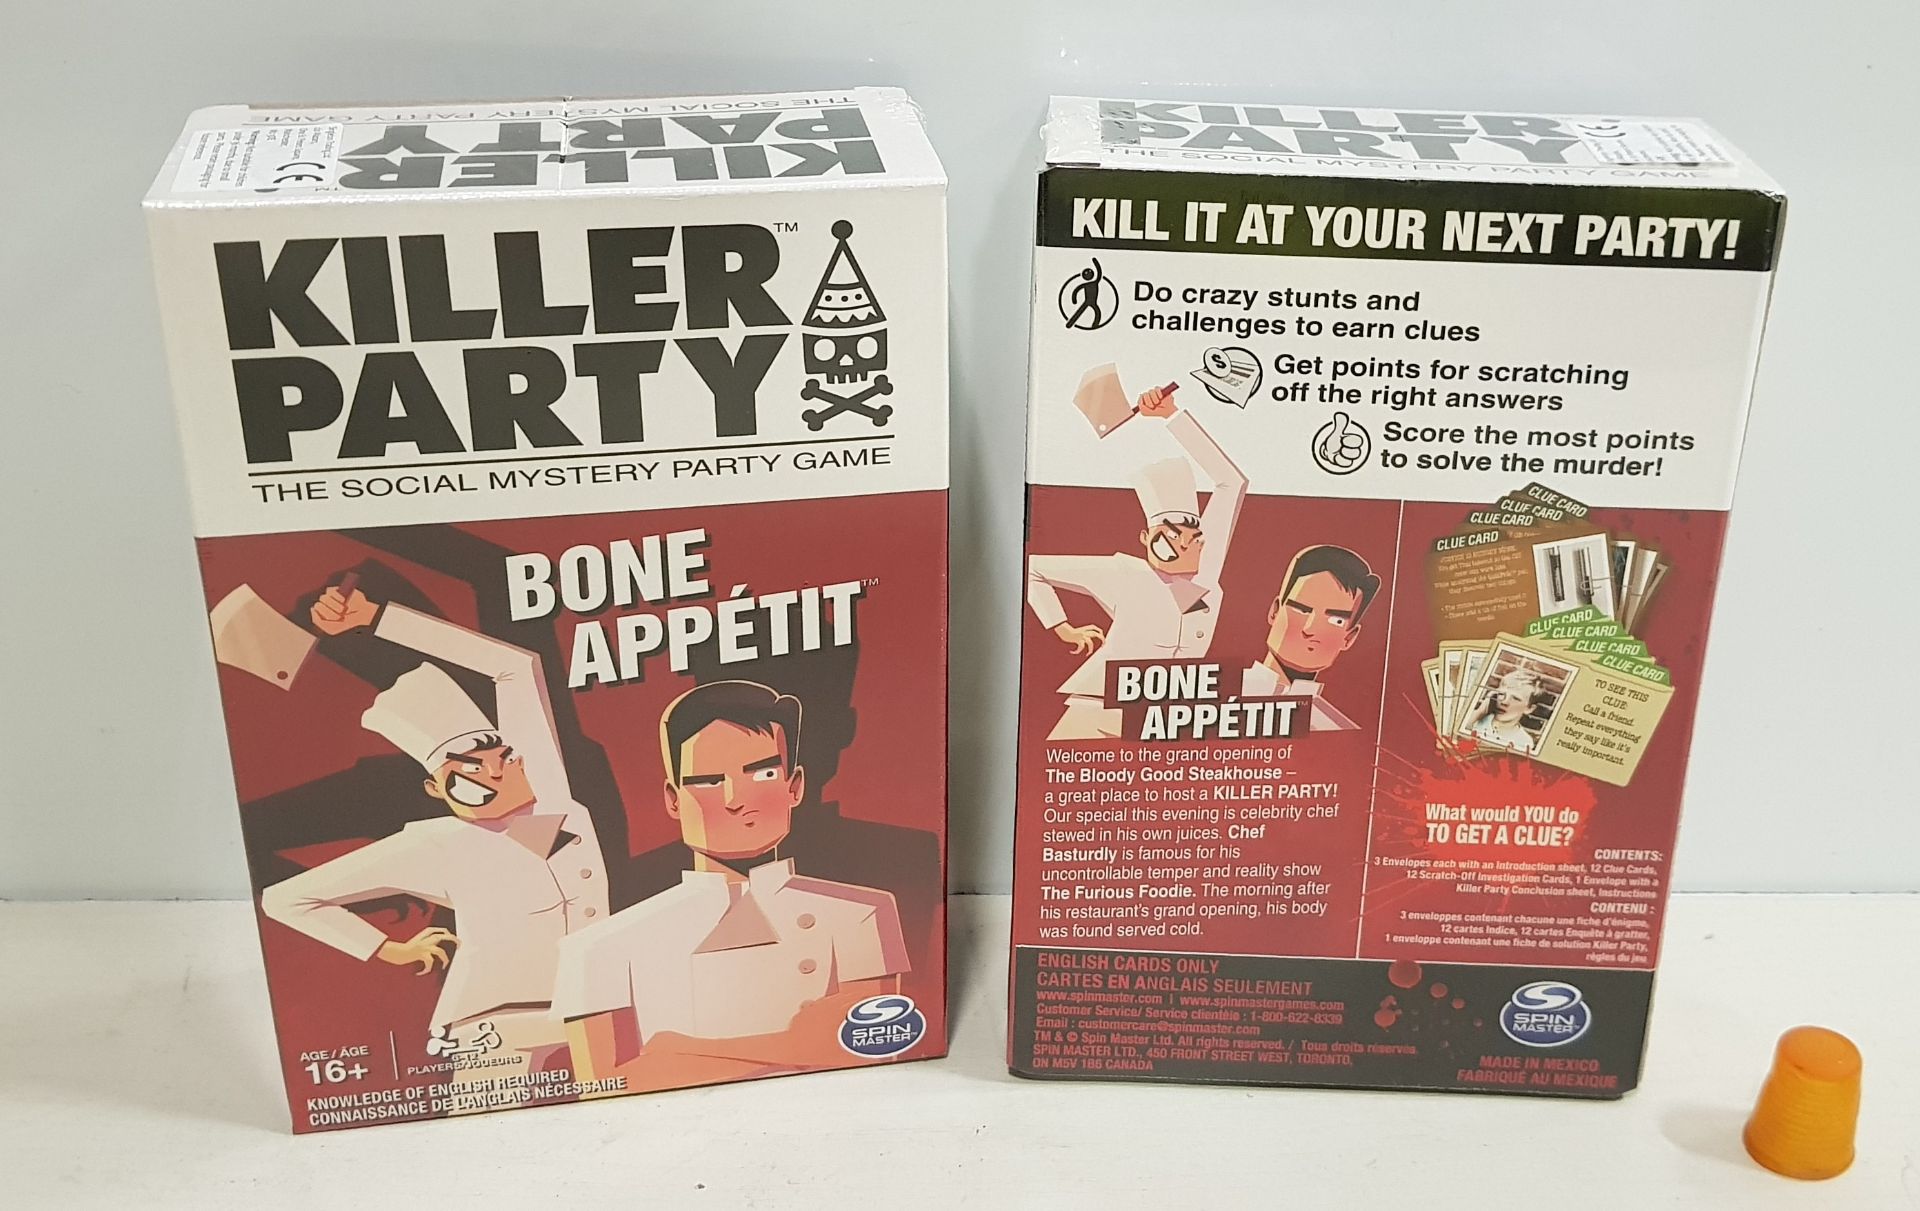 100 X BRAND NEW MURDER MYSTERY KILLER PARTY GAME - BON APPETIT - IN 20 CARTONS